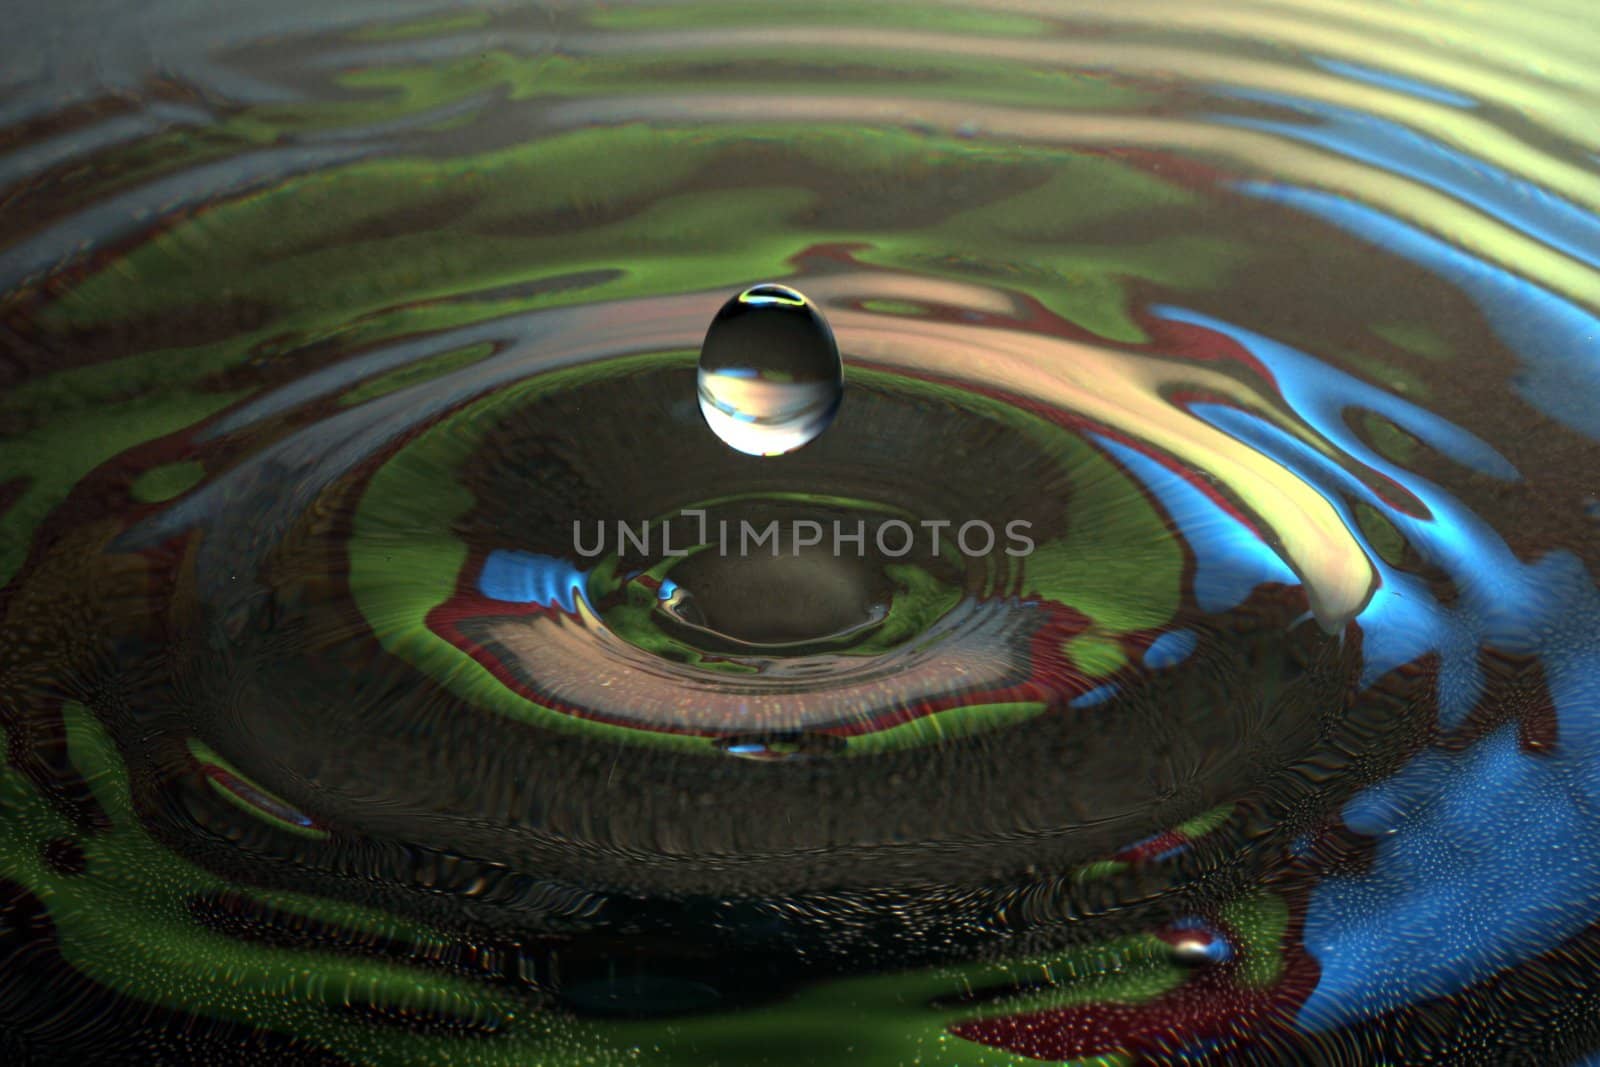 great colourful water drop macro shot by Teka77